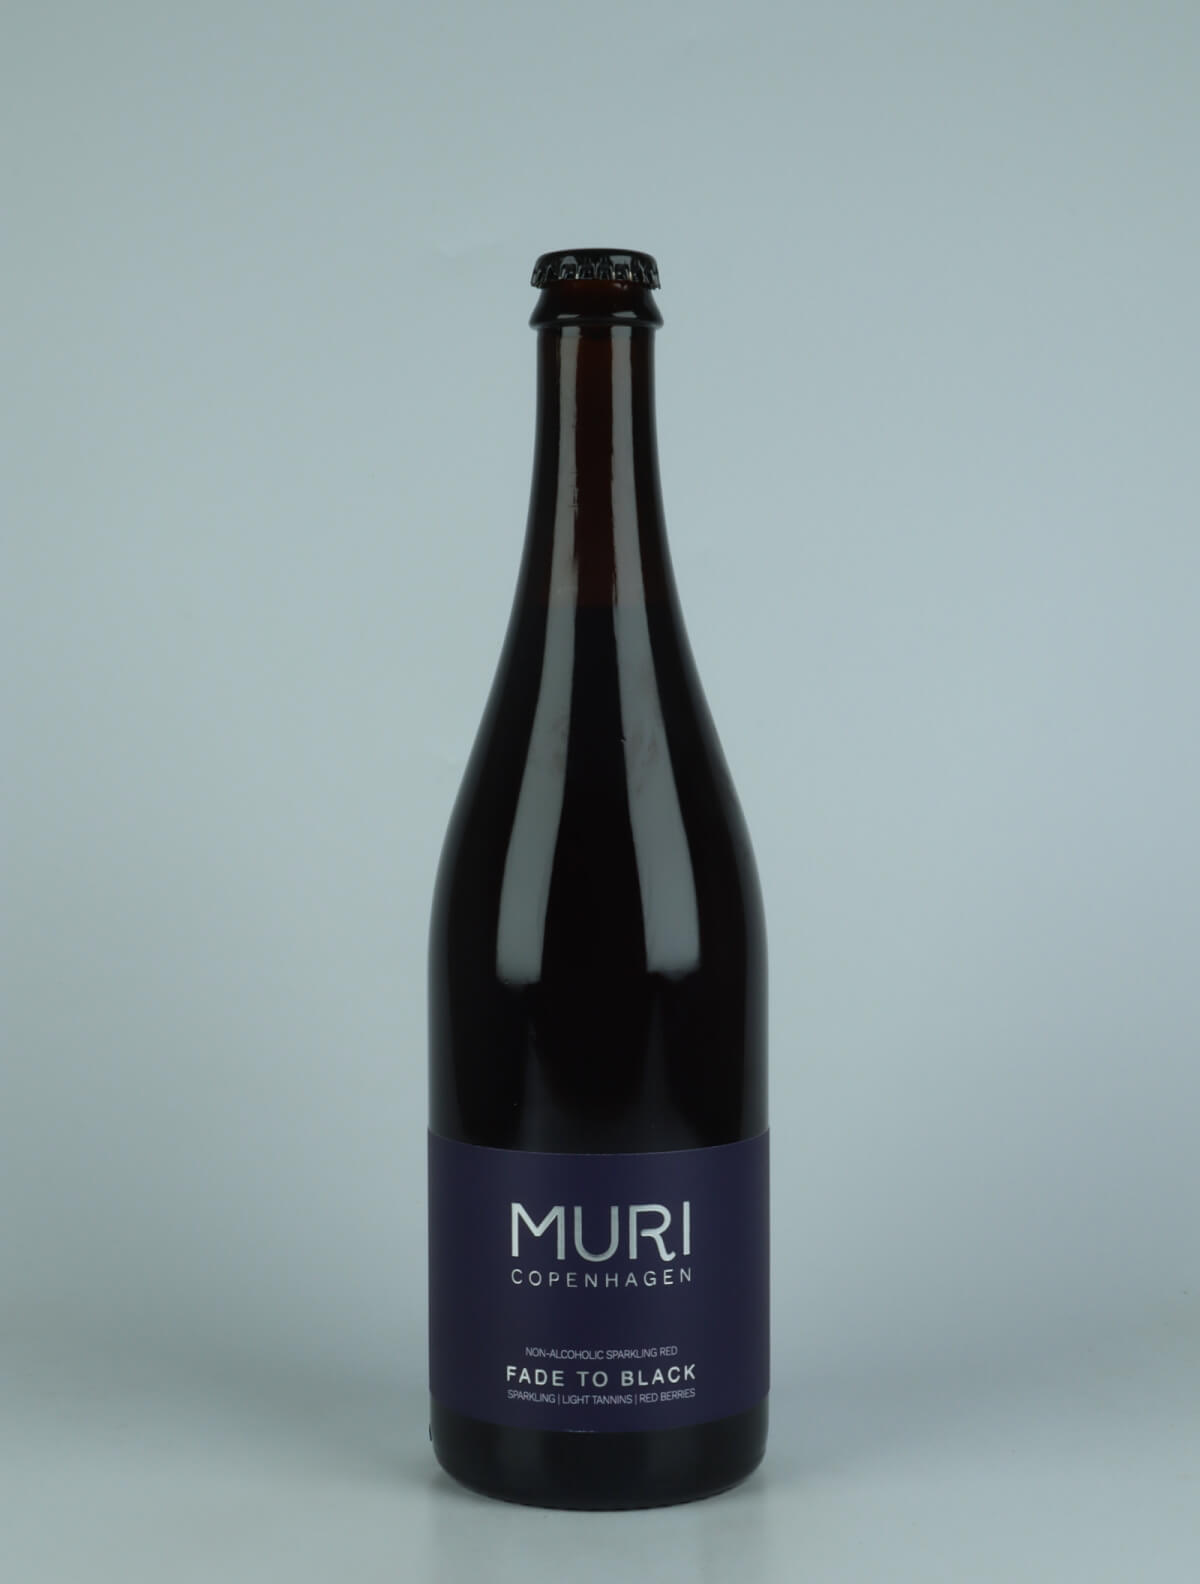 A bottle N.V. Fade to Black Non-alcoholic from Muri, Copenhagen in Denmark